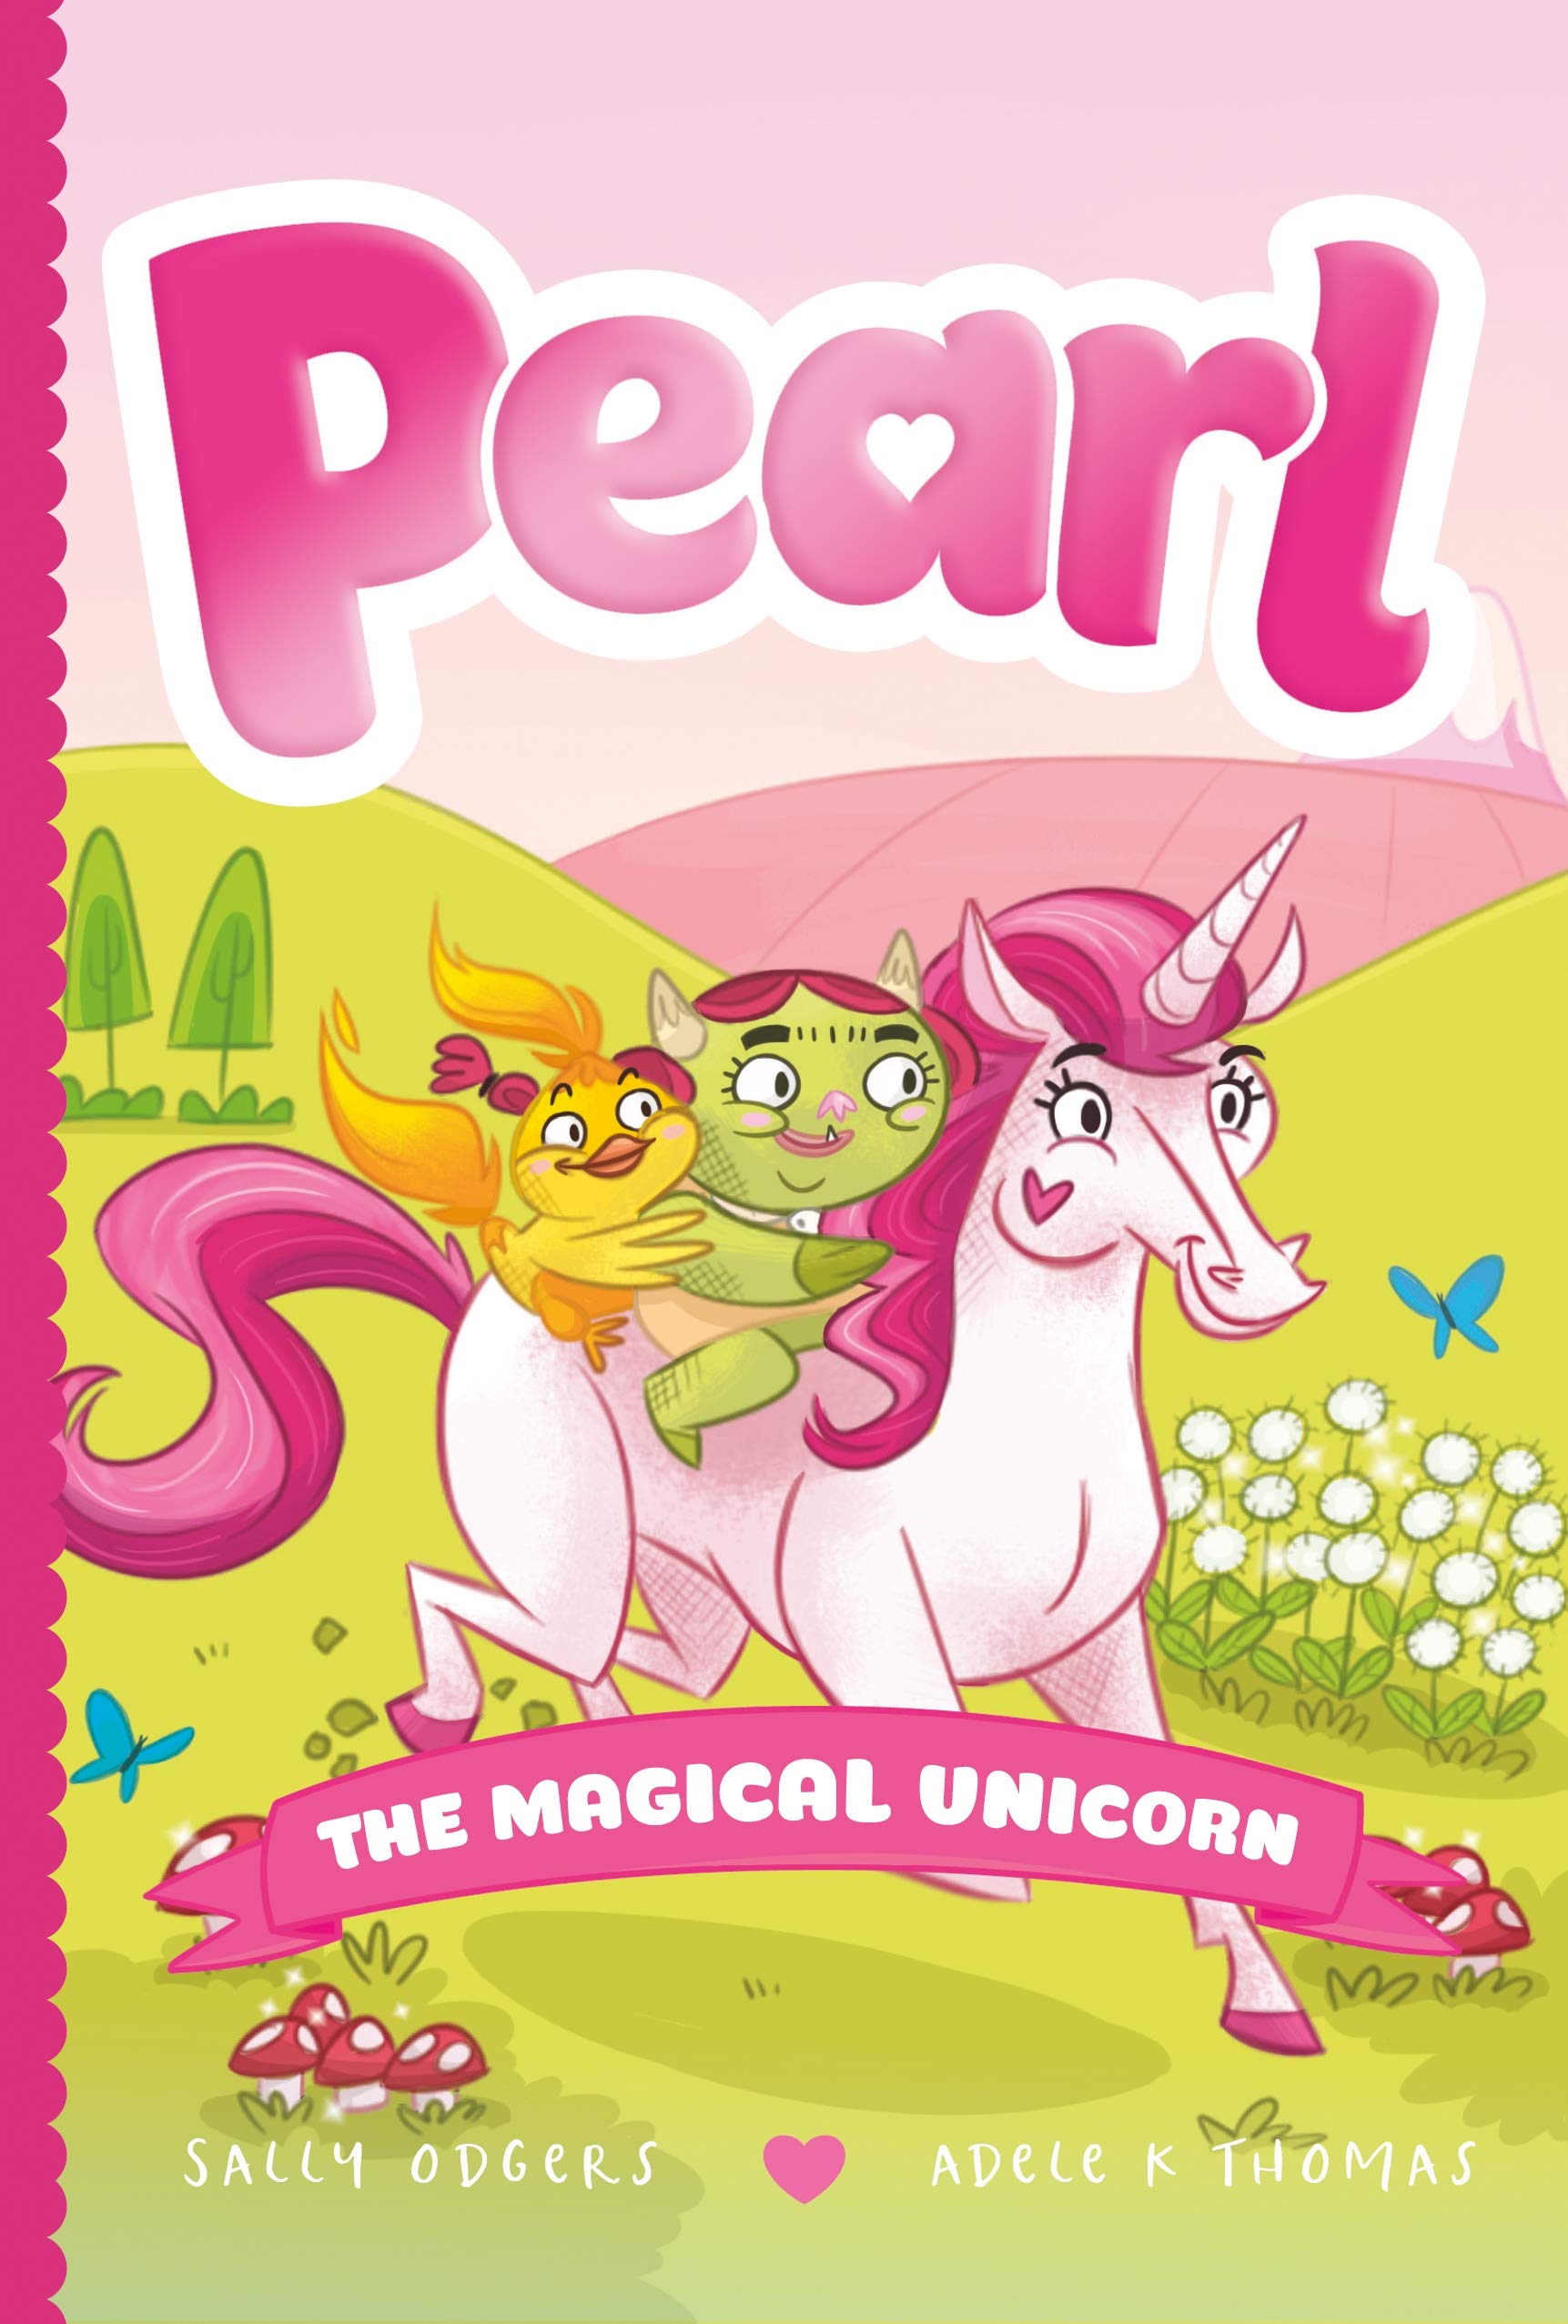 Pearl the Magical Unicorn